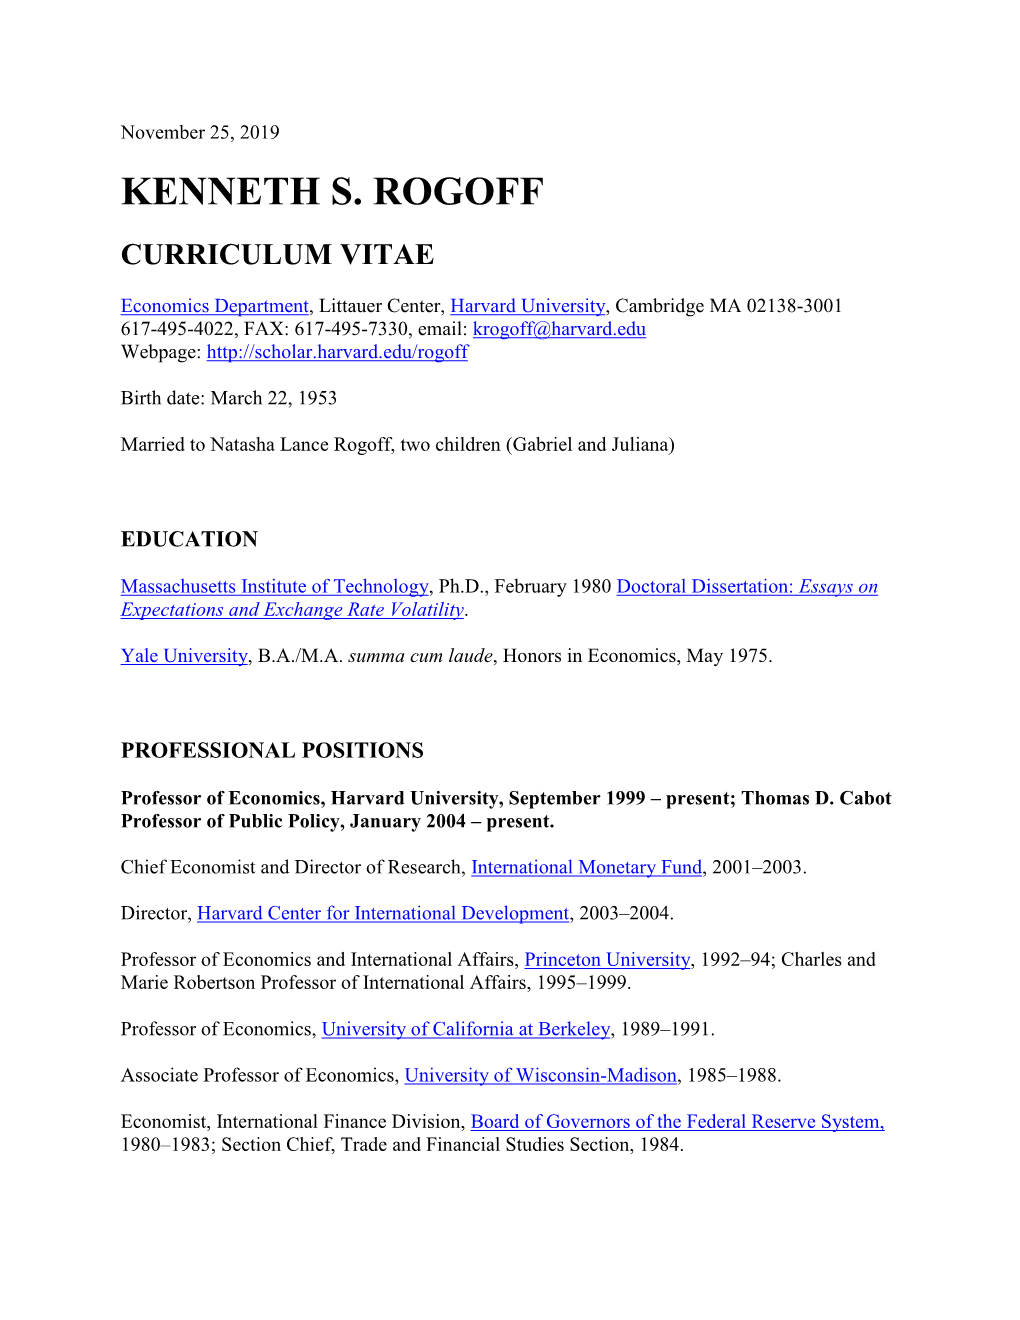 Kenneth S. Rogoff Curriculum Vitae